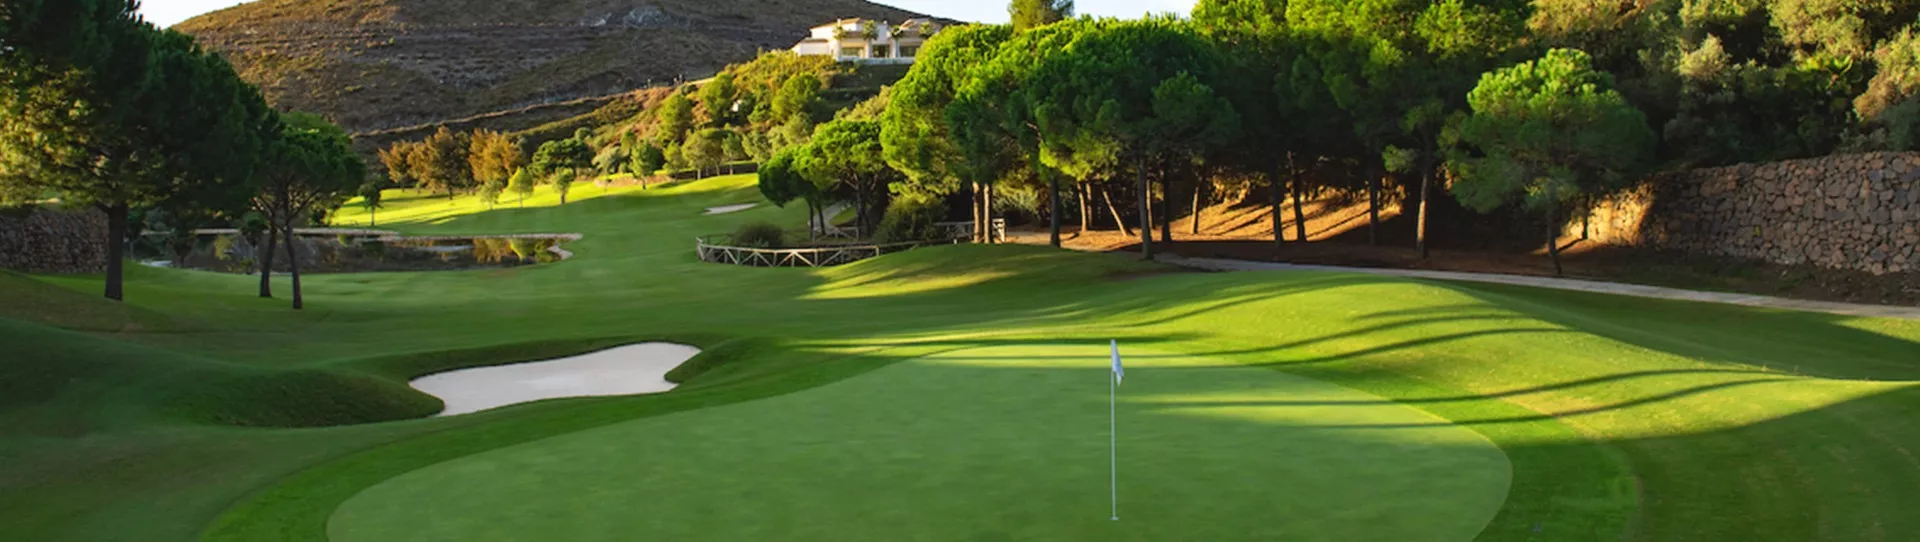 Spain golf courses - Marbella Club Golf Resort - Photo 3